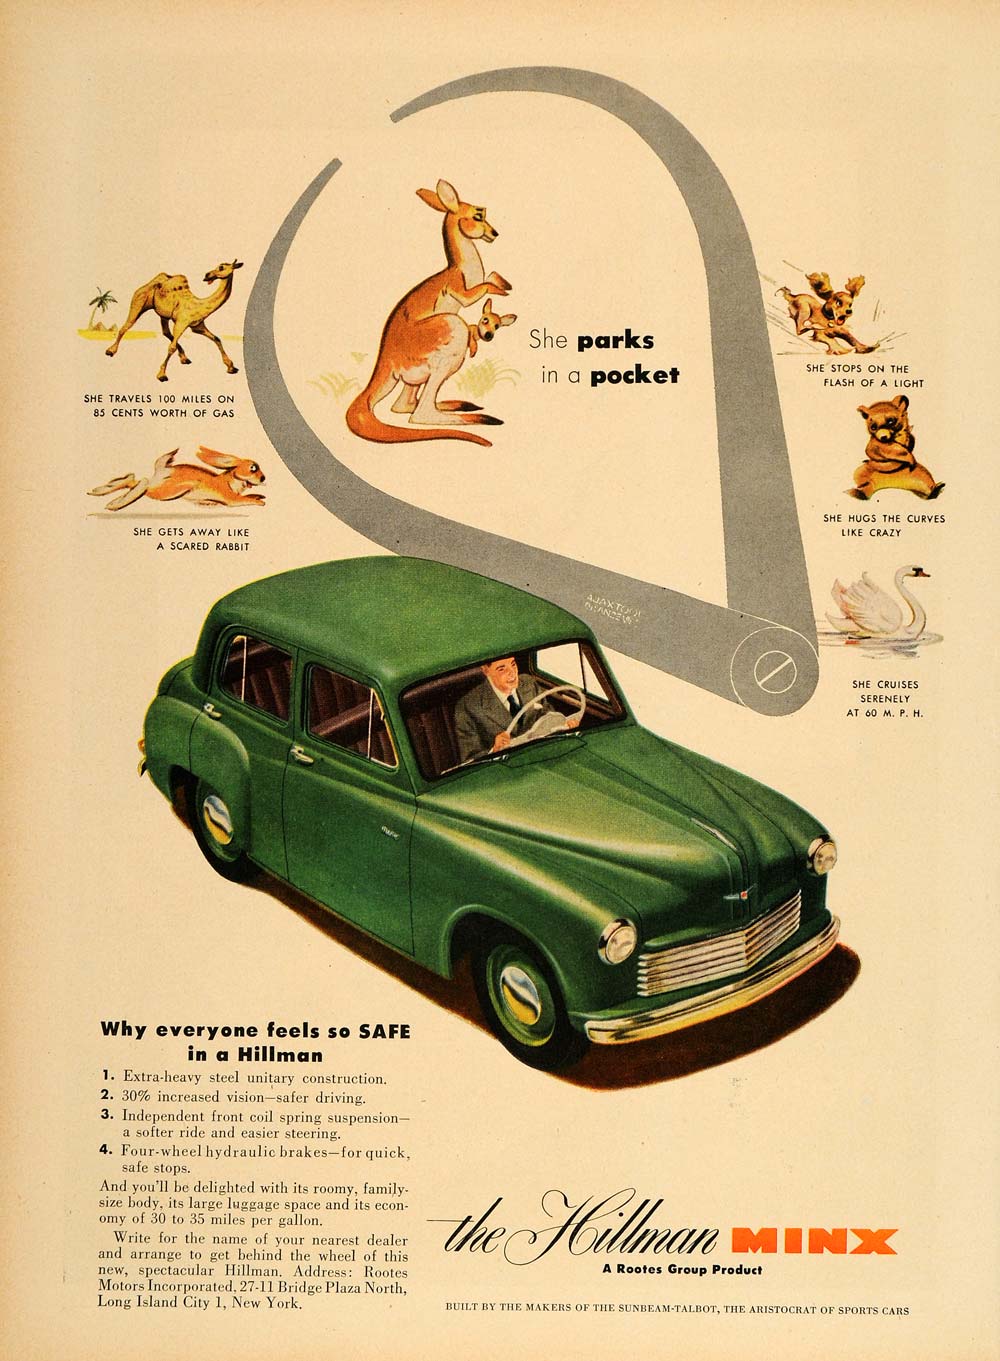 1949 Ad Hillman Minx Green Car Rootes Group Kangaroo - ORIGINAL ADVERTISING TM1